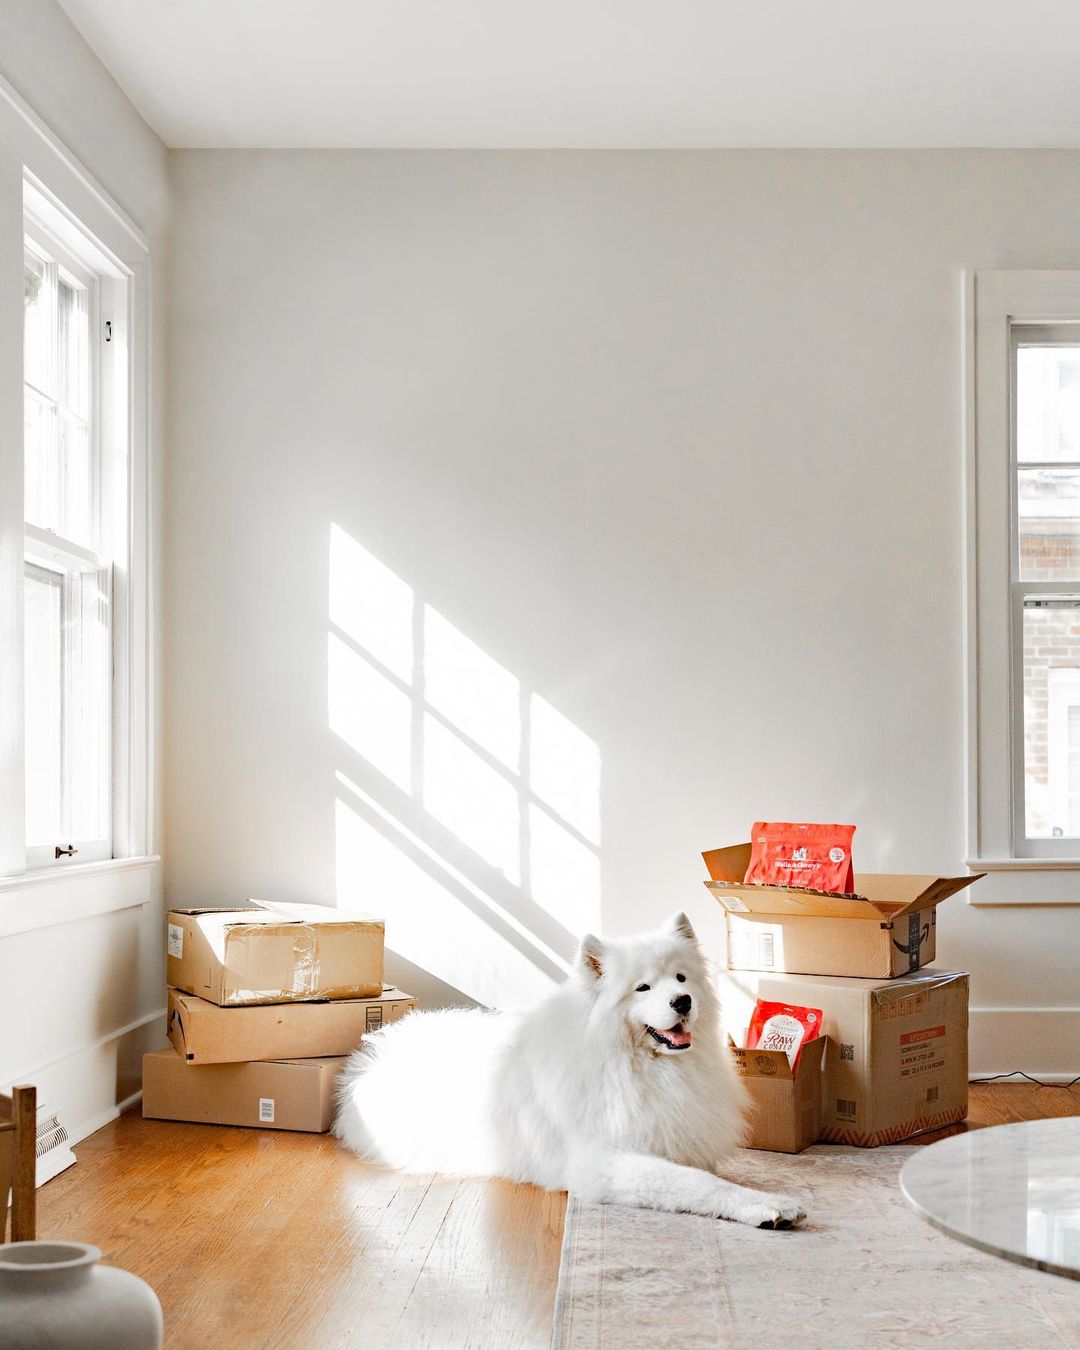 white dog next to moving boxes. photo via @ byolivialee